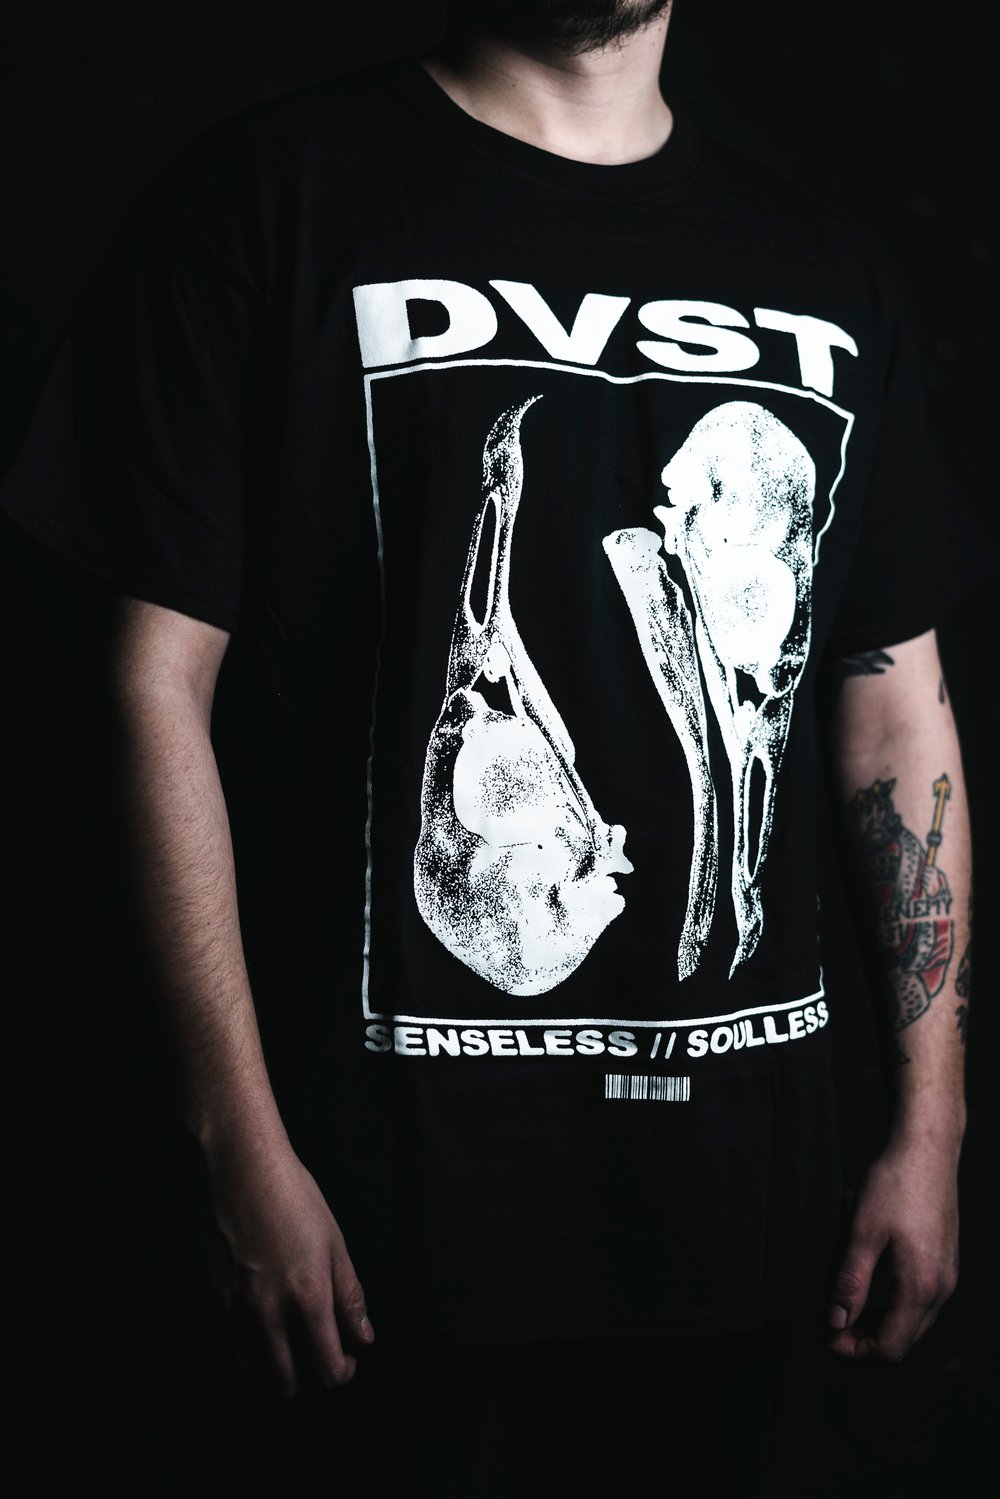 Image of DVST SENSELESS//SOULLESS SHIRT BLACK